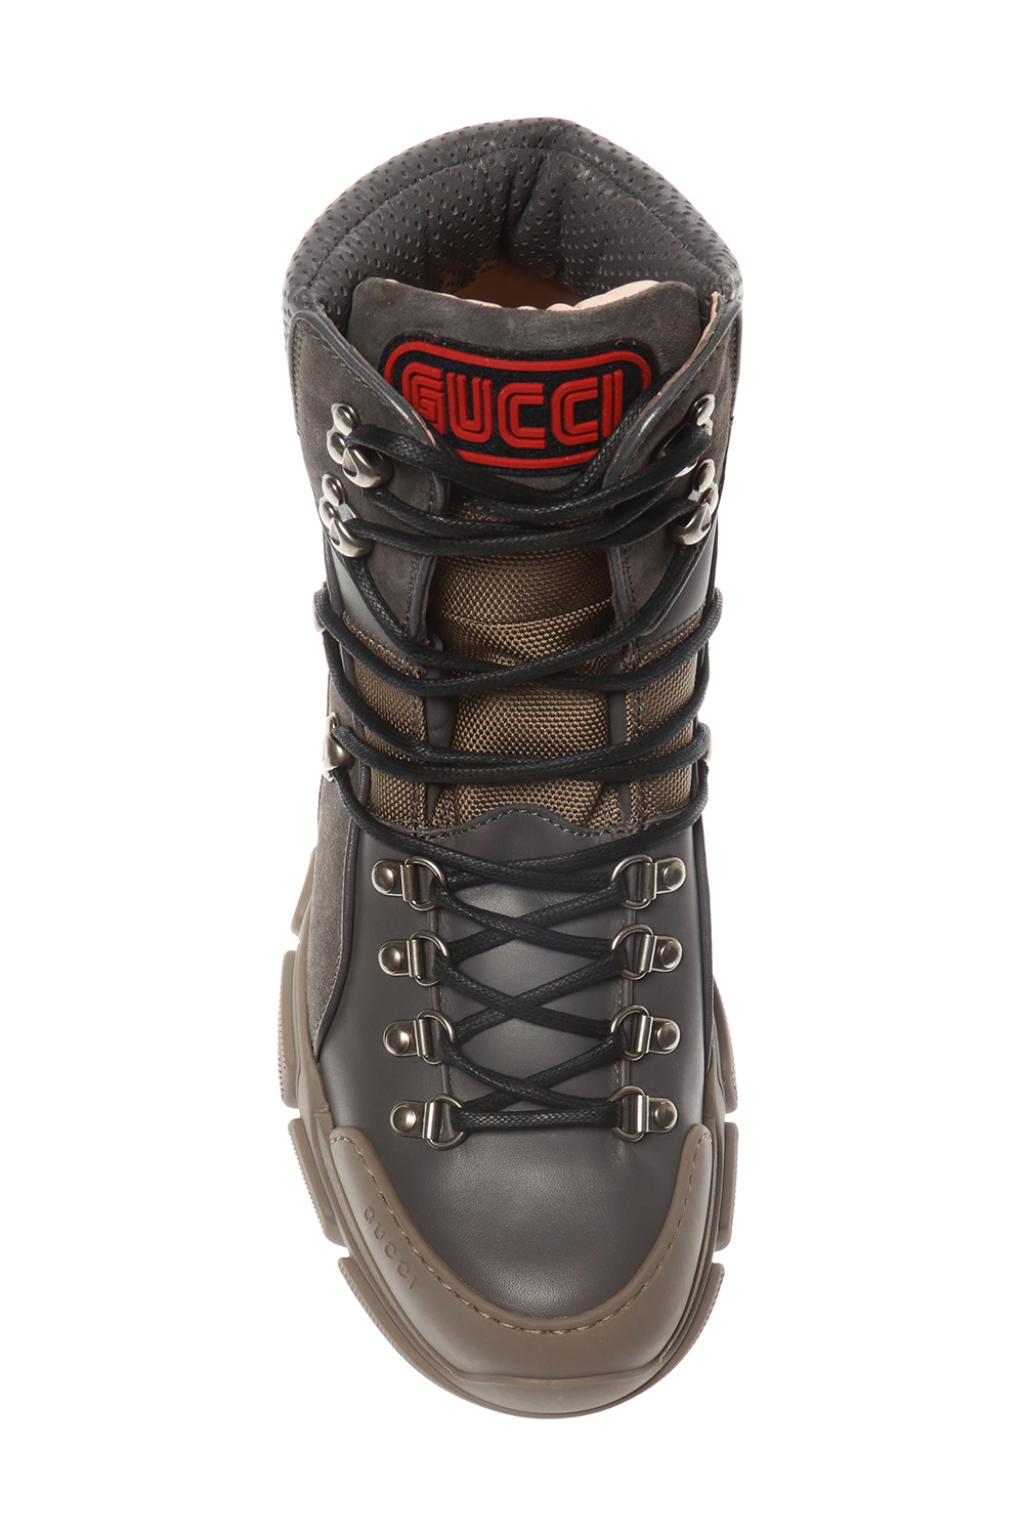 grey gucci boots